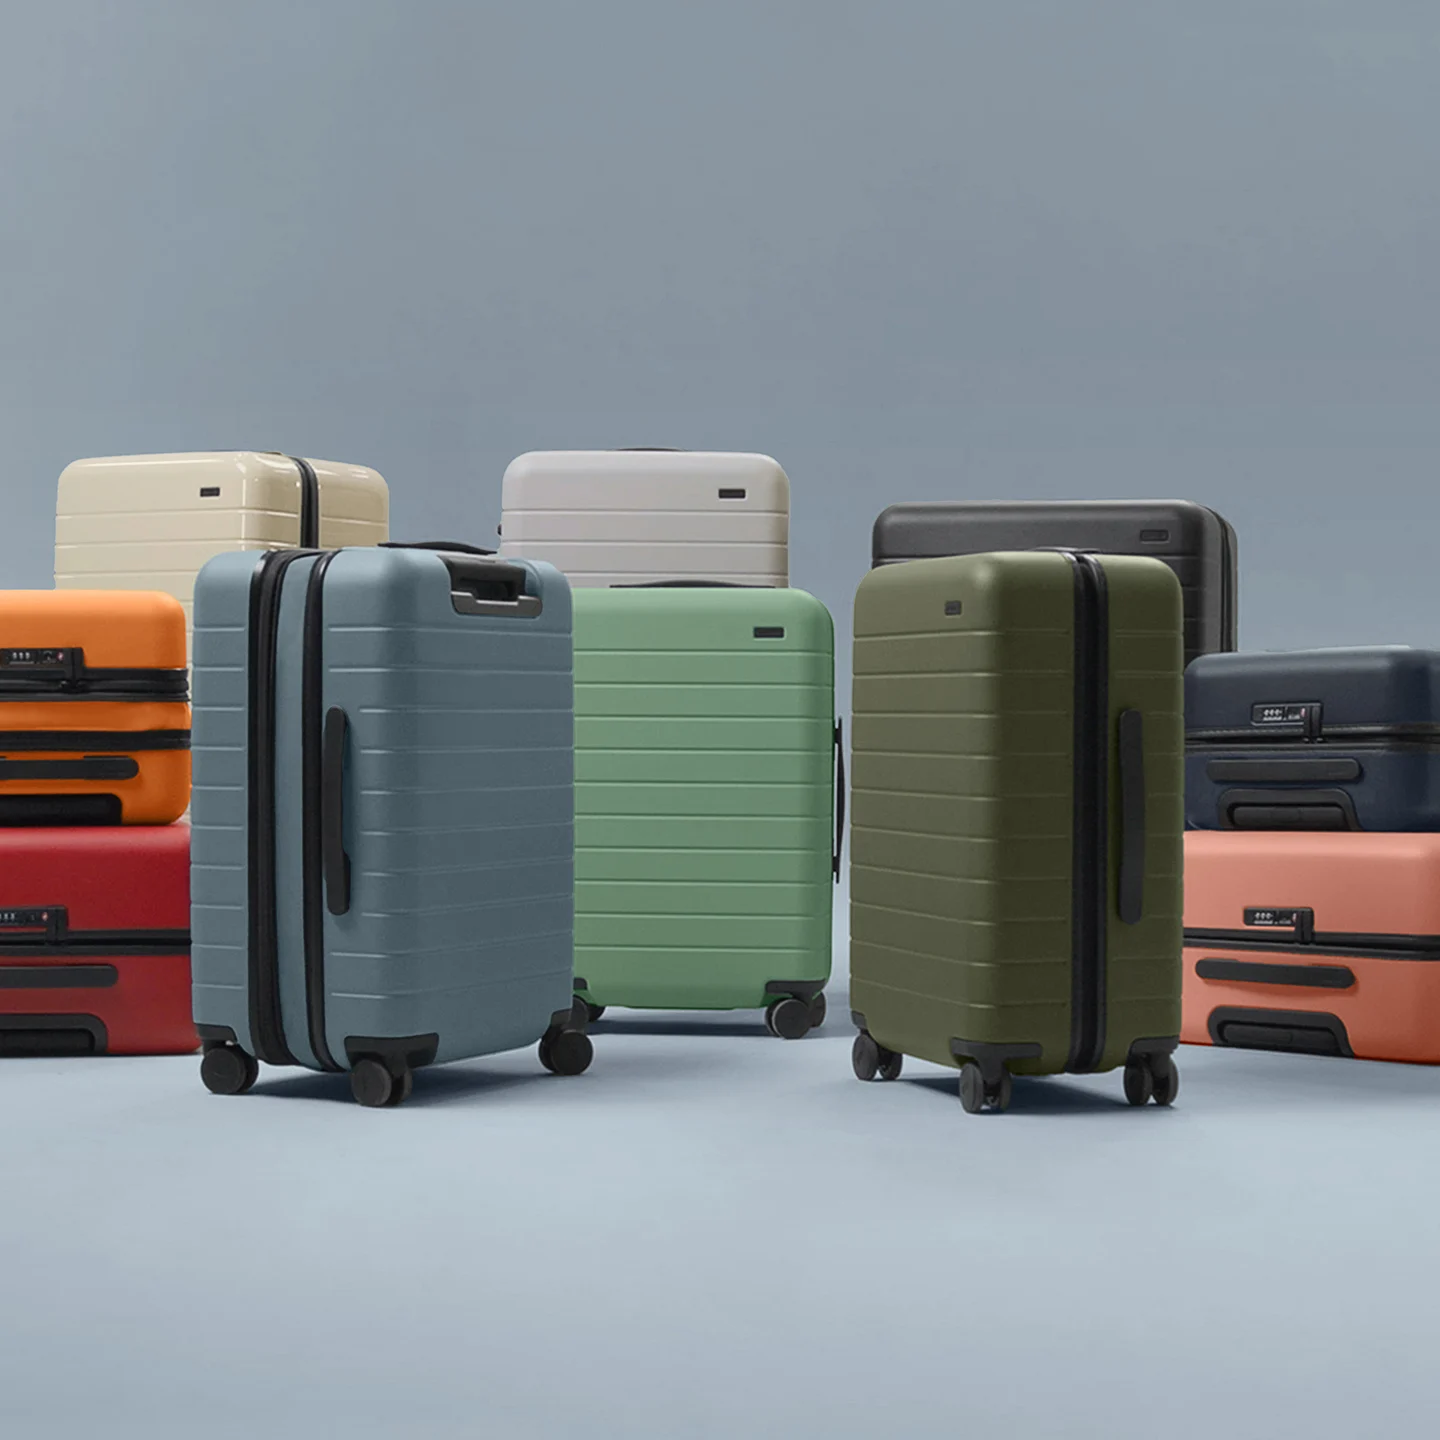 travel luggage on sale